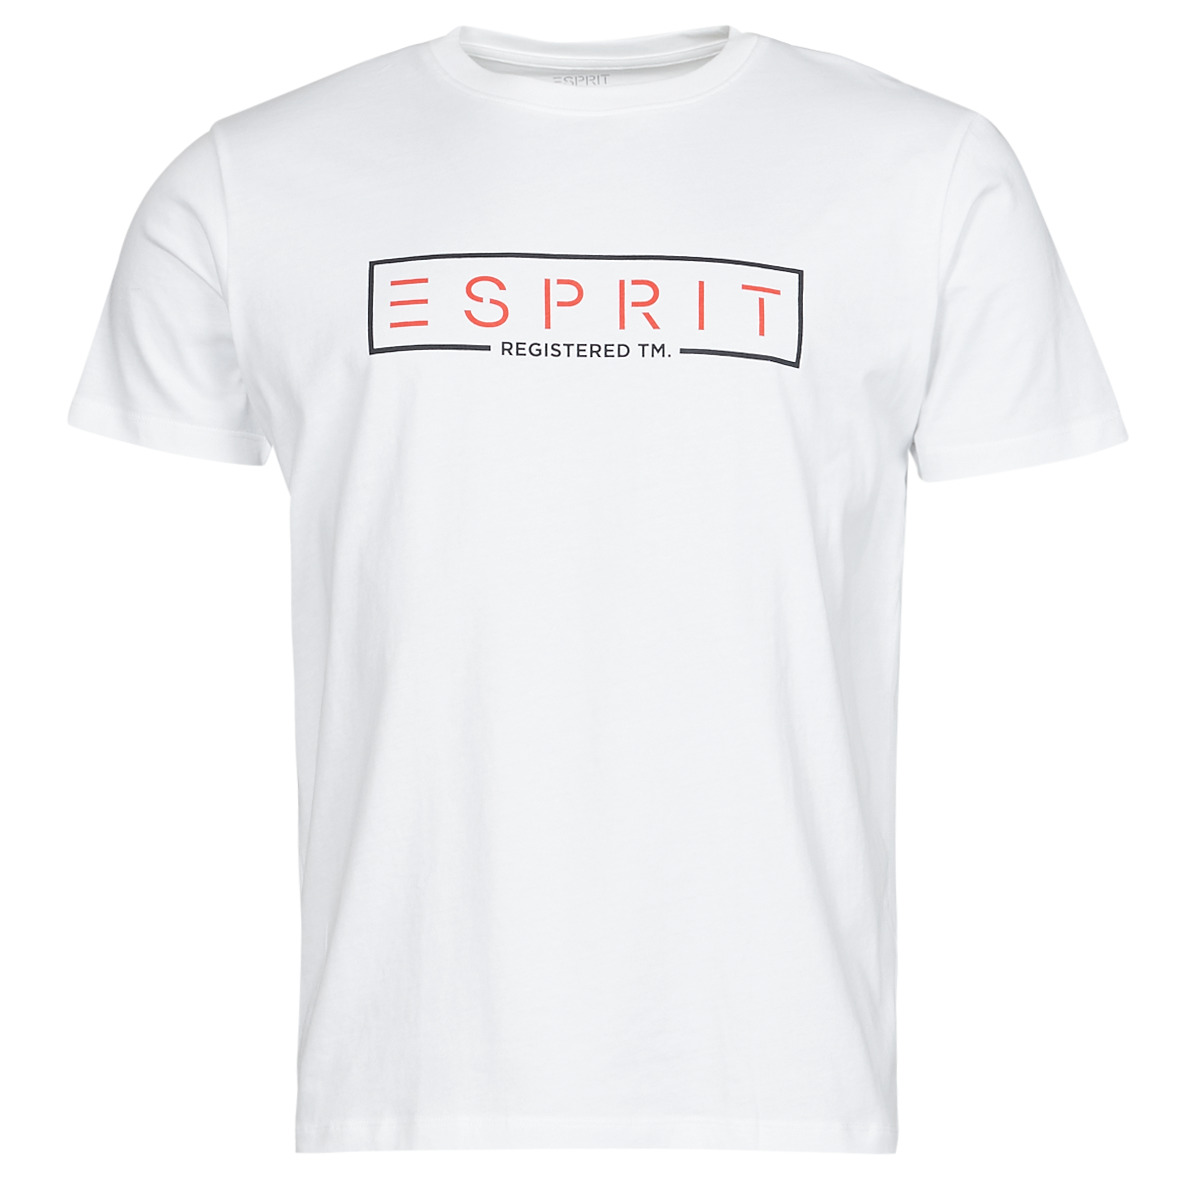 Textiel Heren T-shirts korte mouwen Esprit BCI N cn aw ss Wit